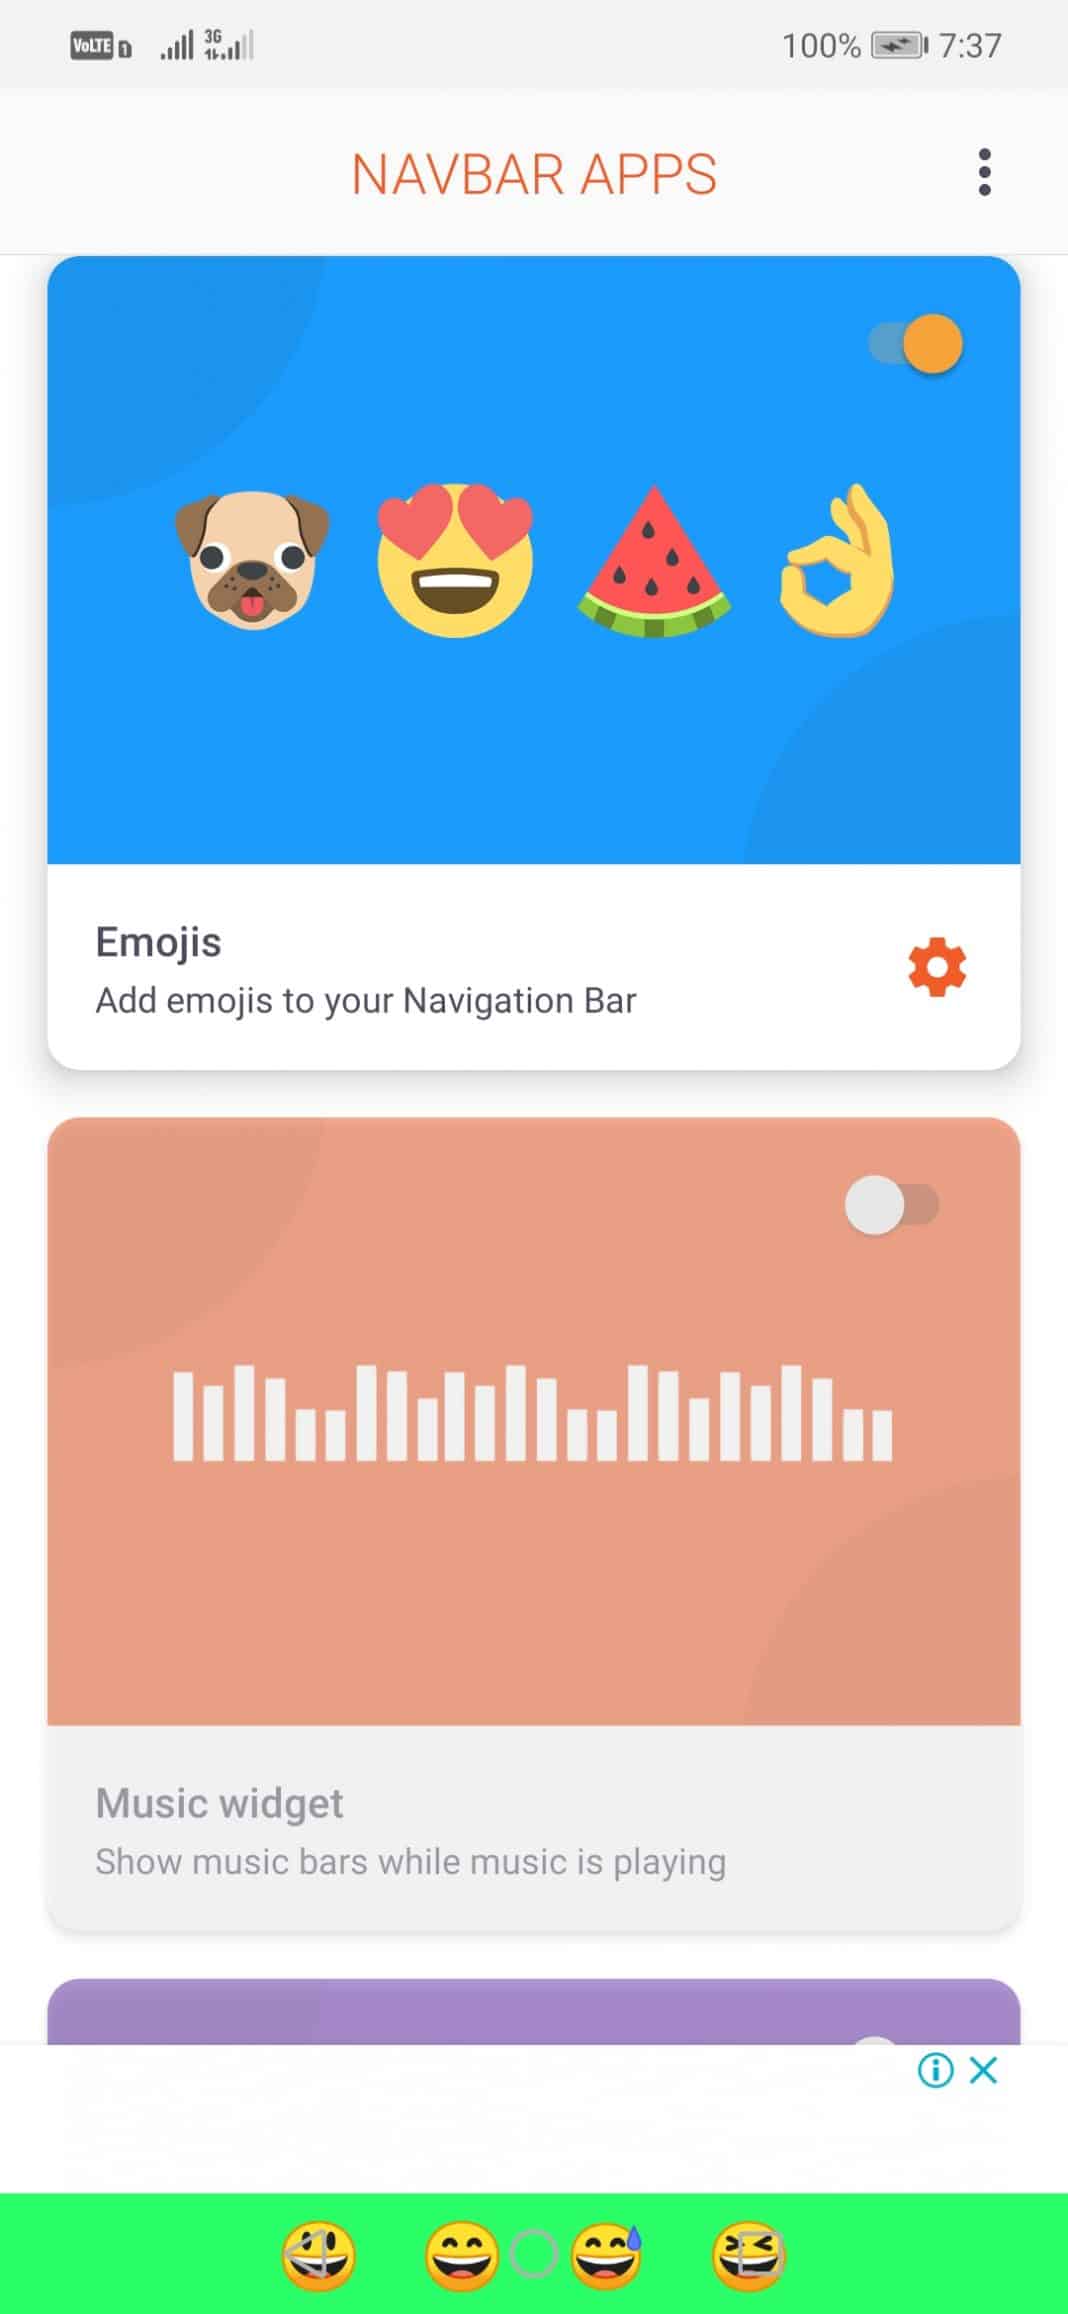 Select 'Emojis' and 'Music Widget' to set as navigation bar